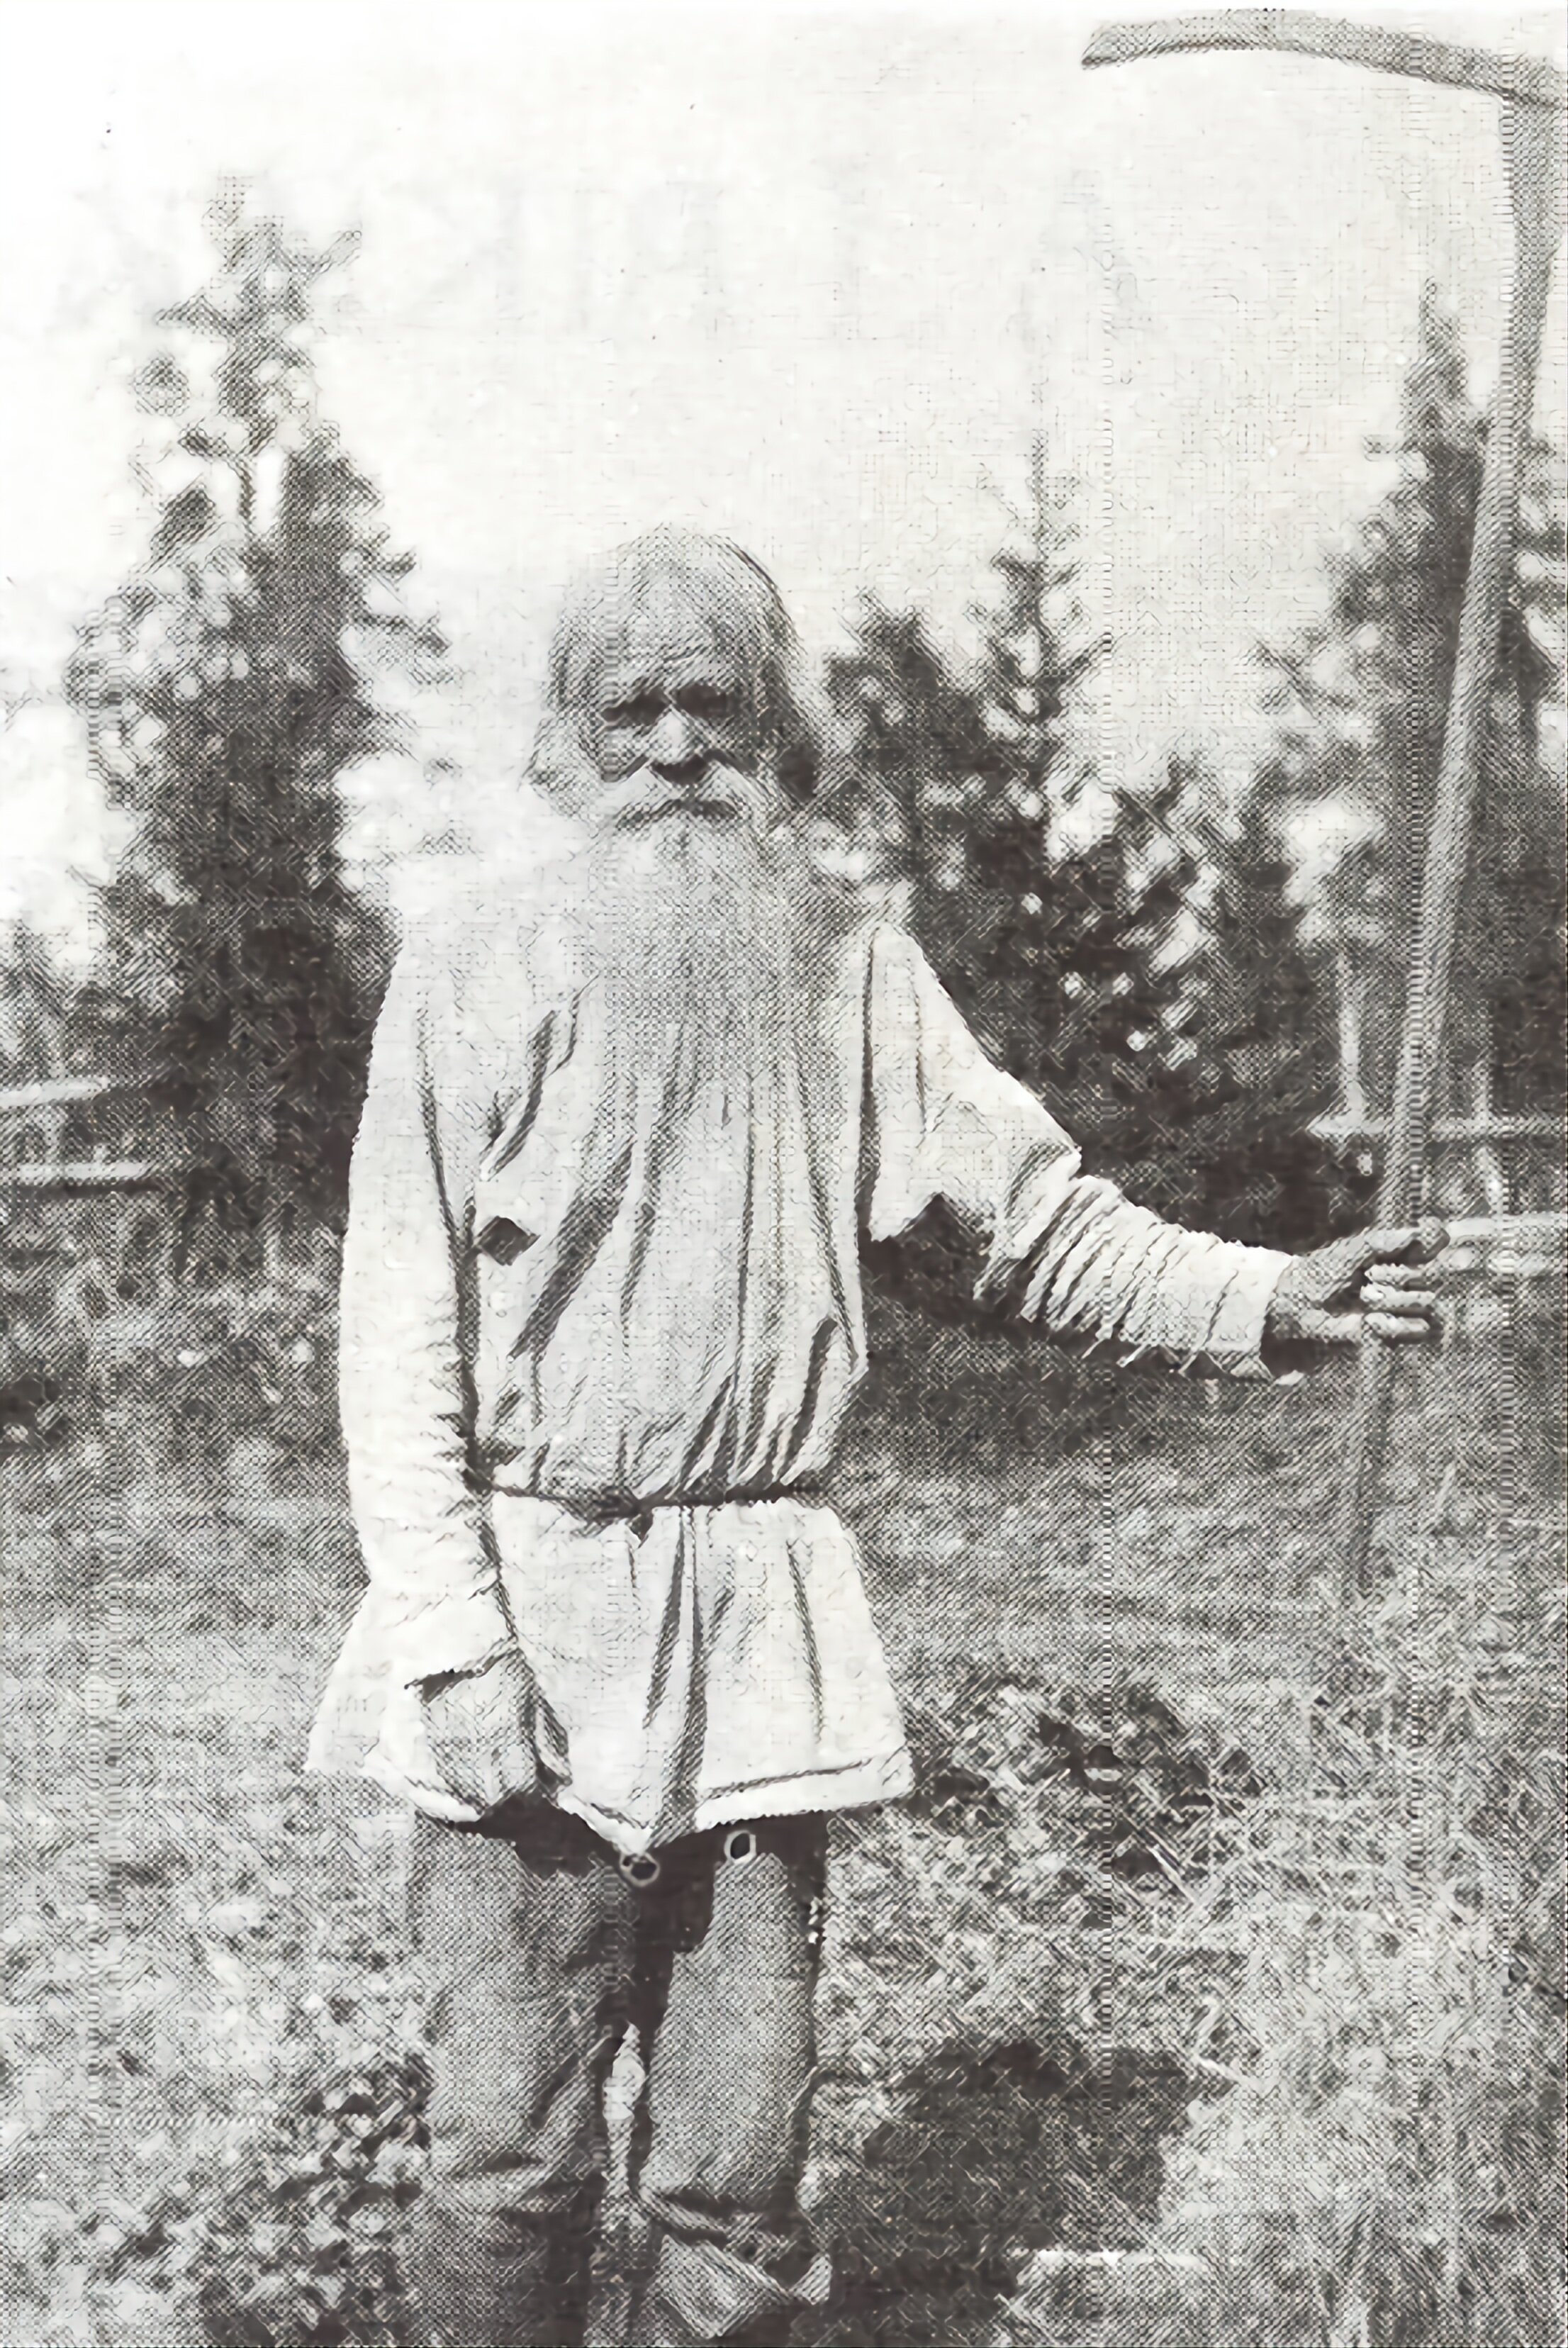 Uljaska_Br Enwald 1918_Karjalan heimo (1) (2).jpg